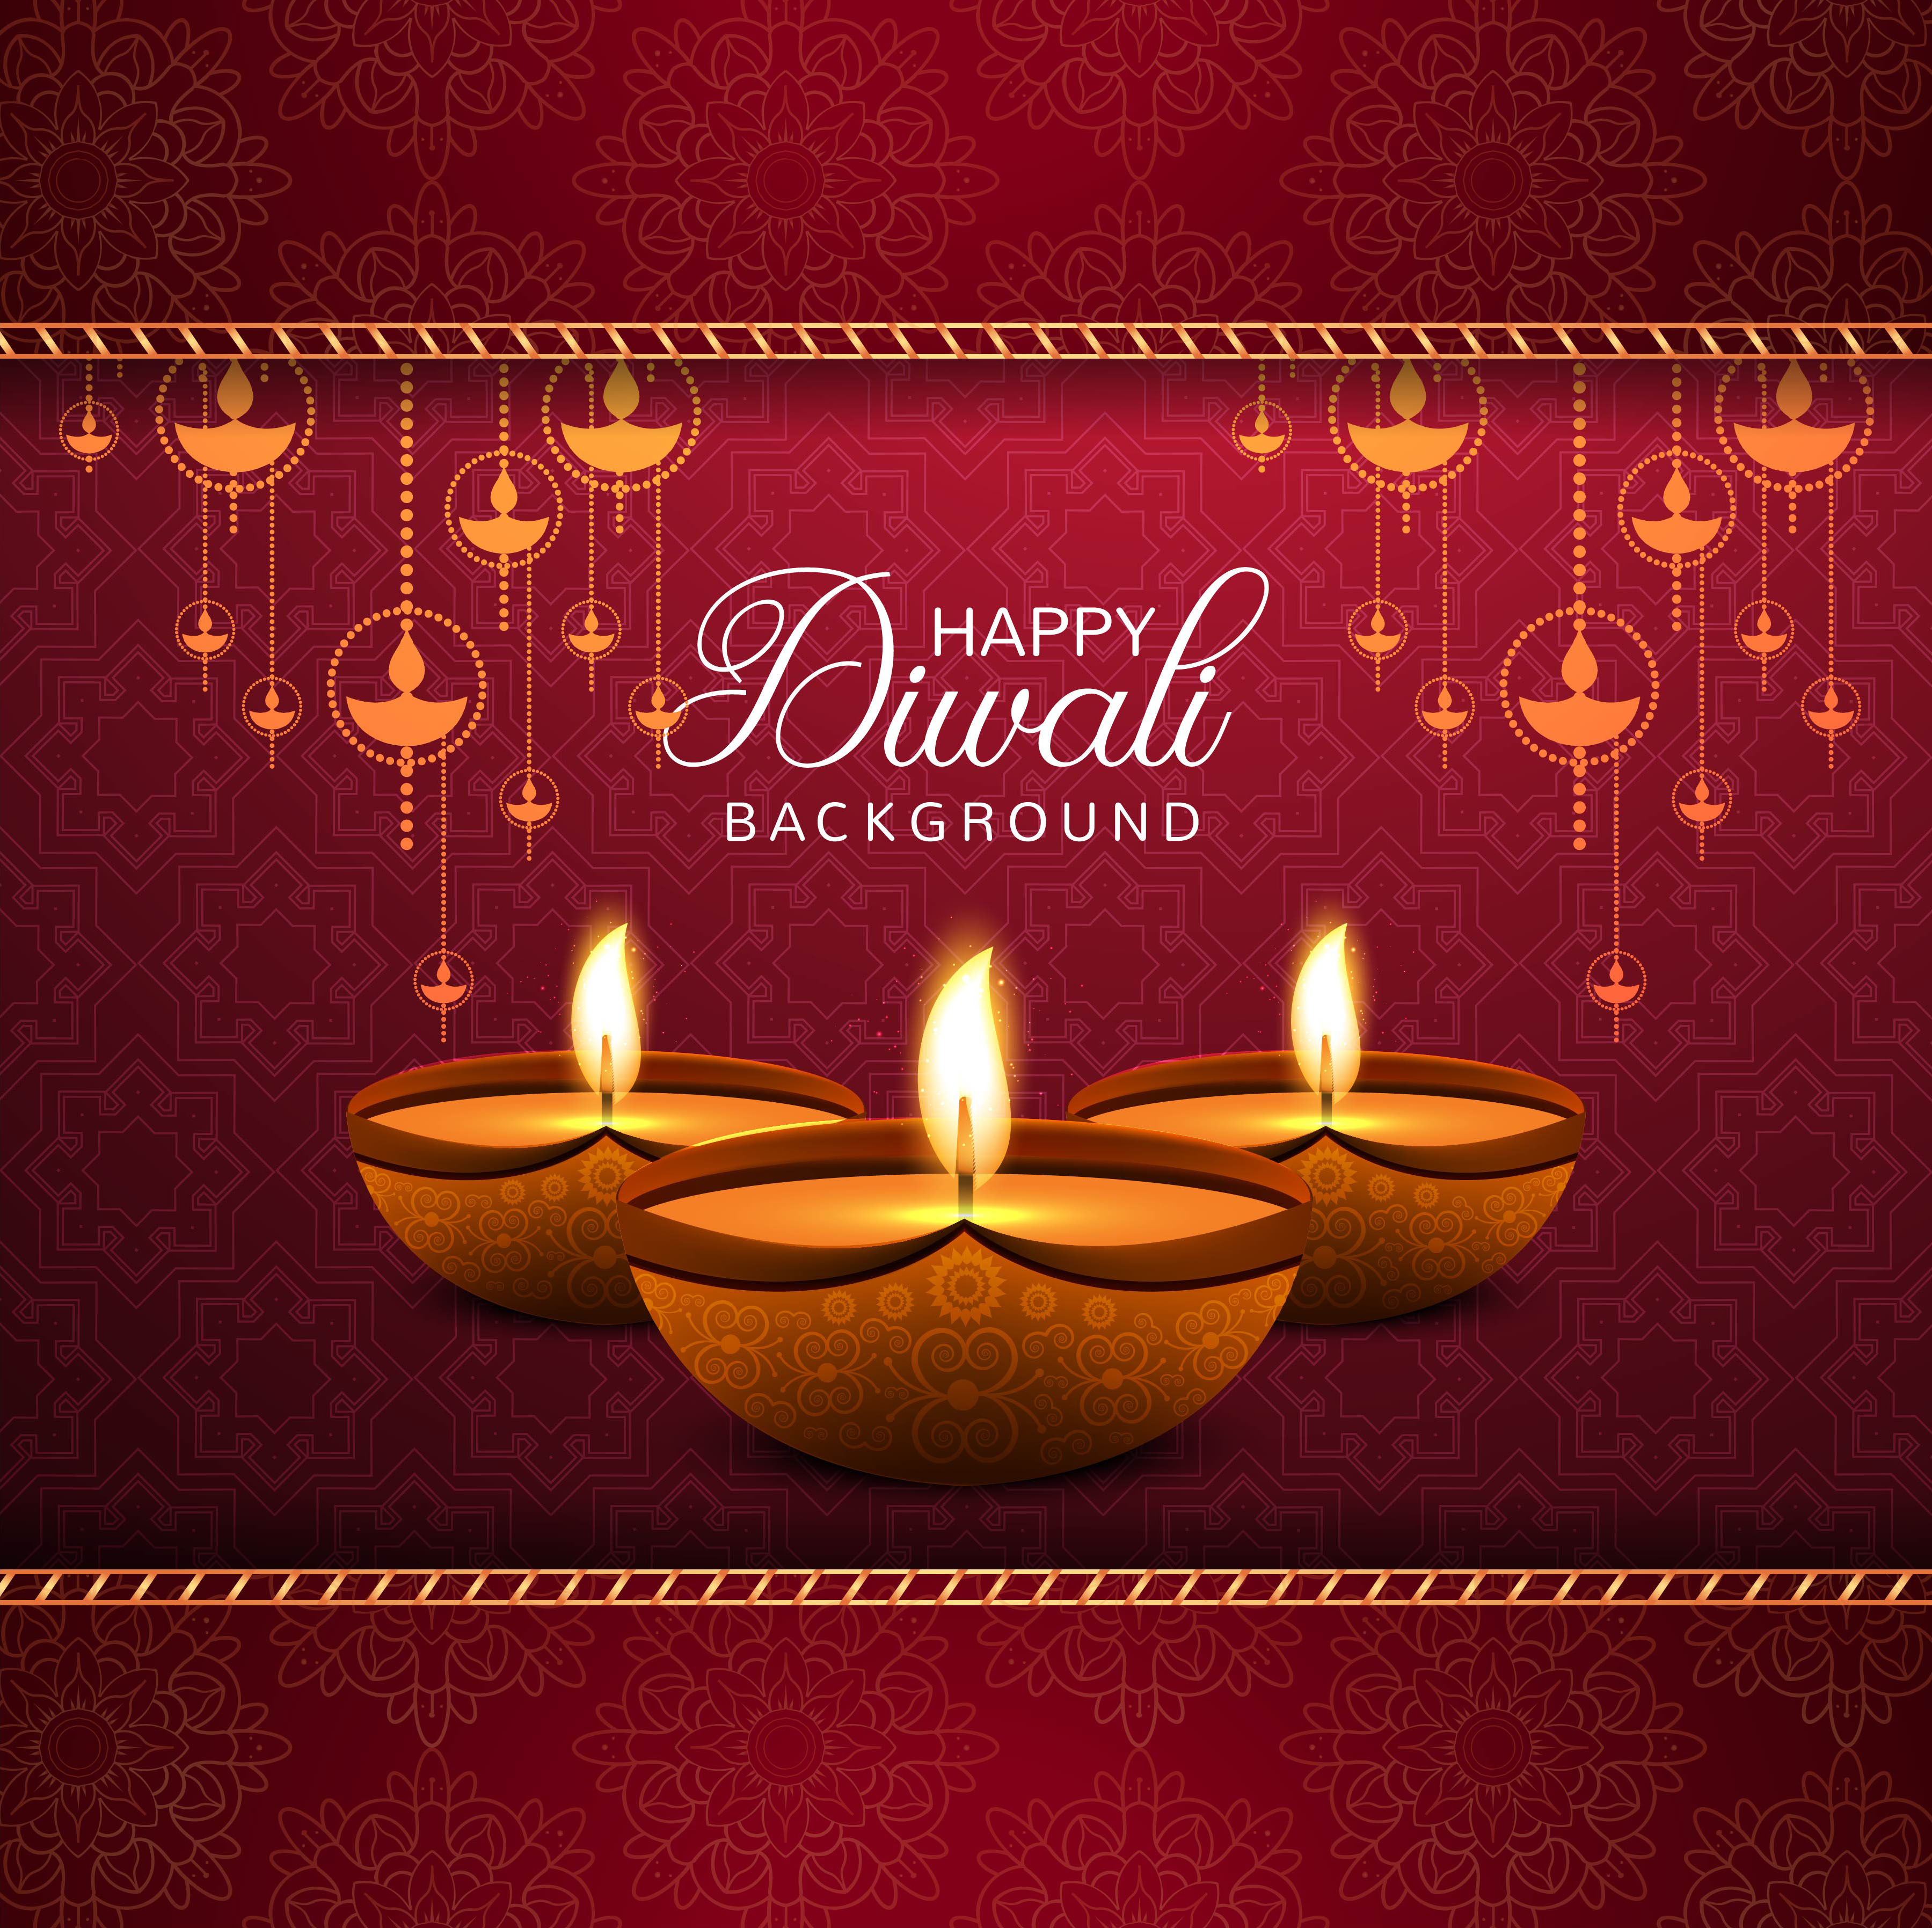 Elegant Happy Diwali decorative red background - Download ...